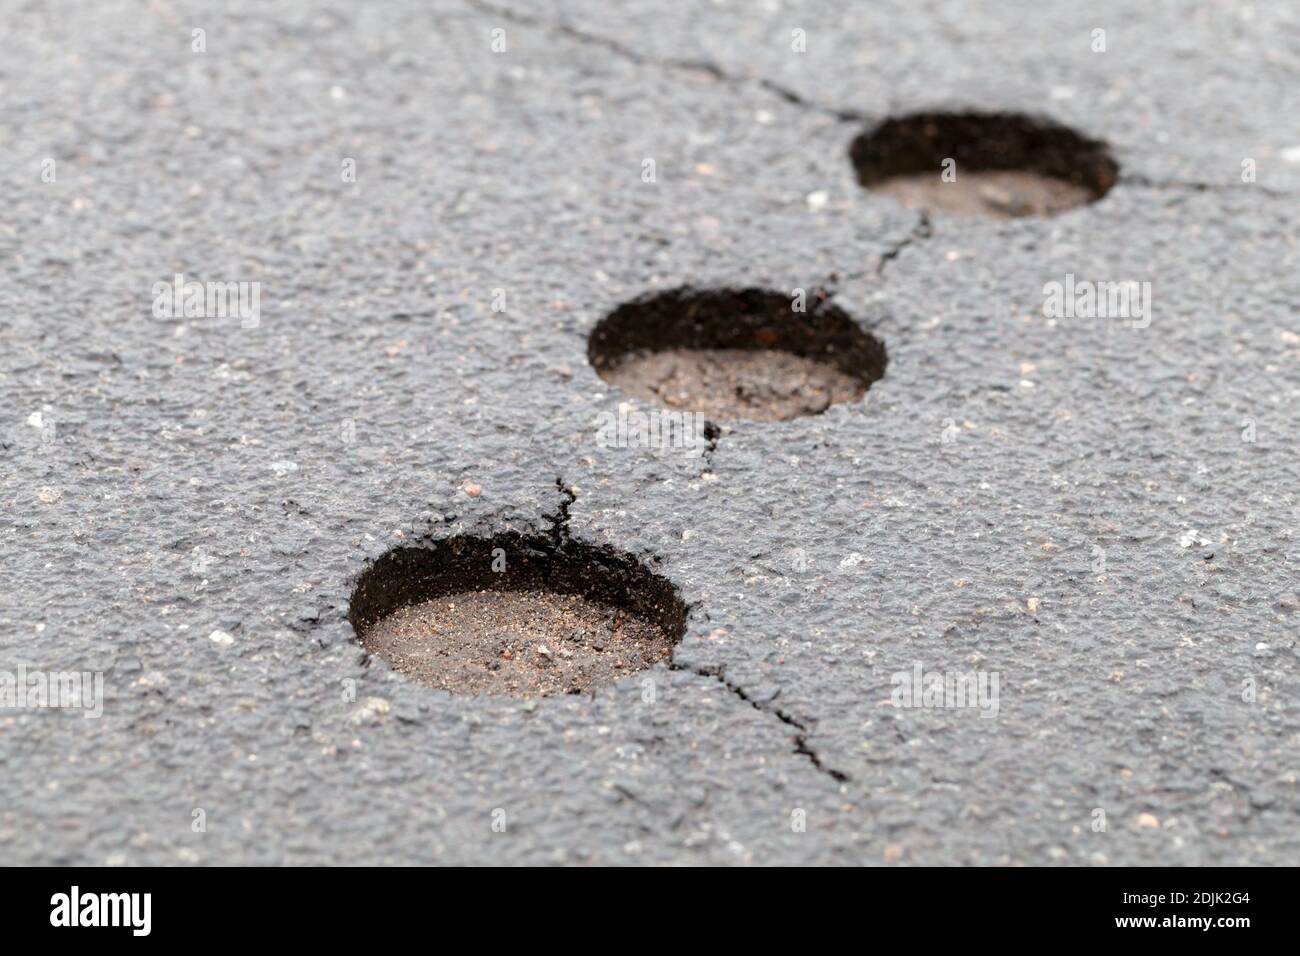 Damaged asphalt road with cracks and pavement test holes, close-up photo Stock Photo